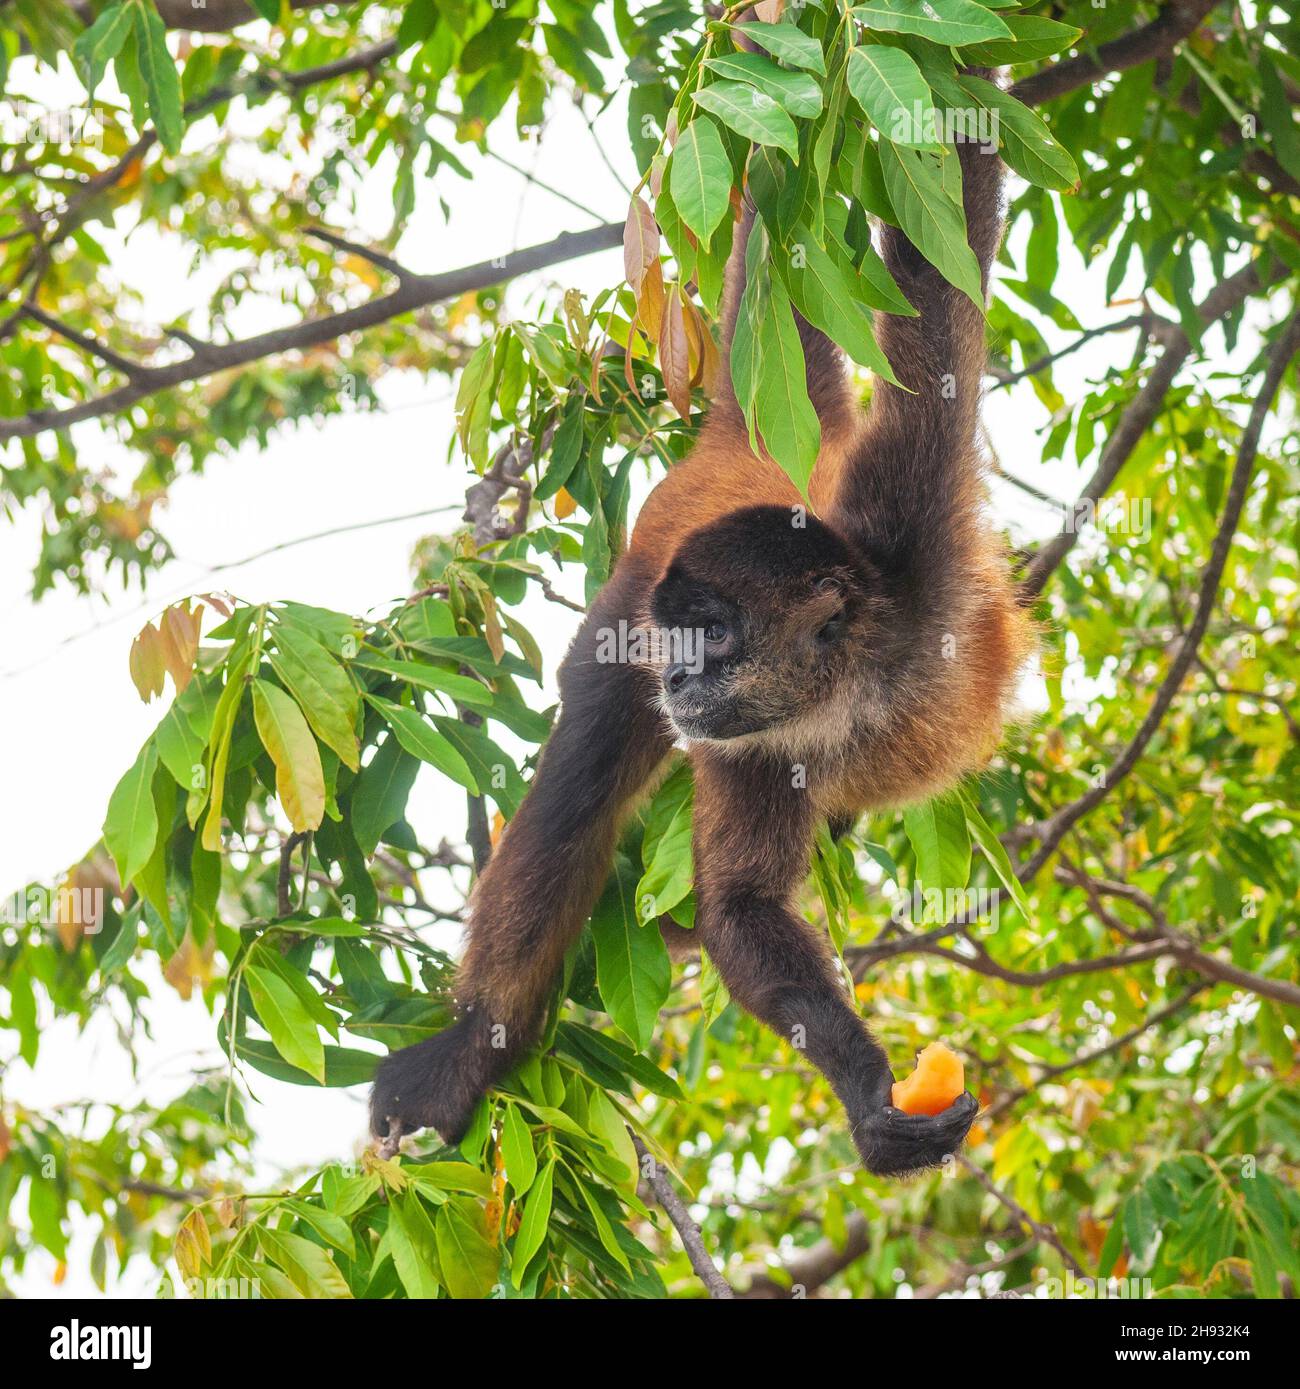 Spider monkey (Ateles) eating papaya in square format, Tortuguero national park, Costa Rica. Stock Photo